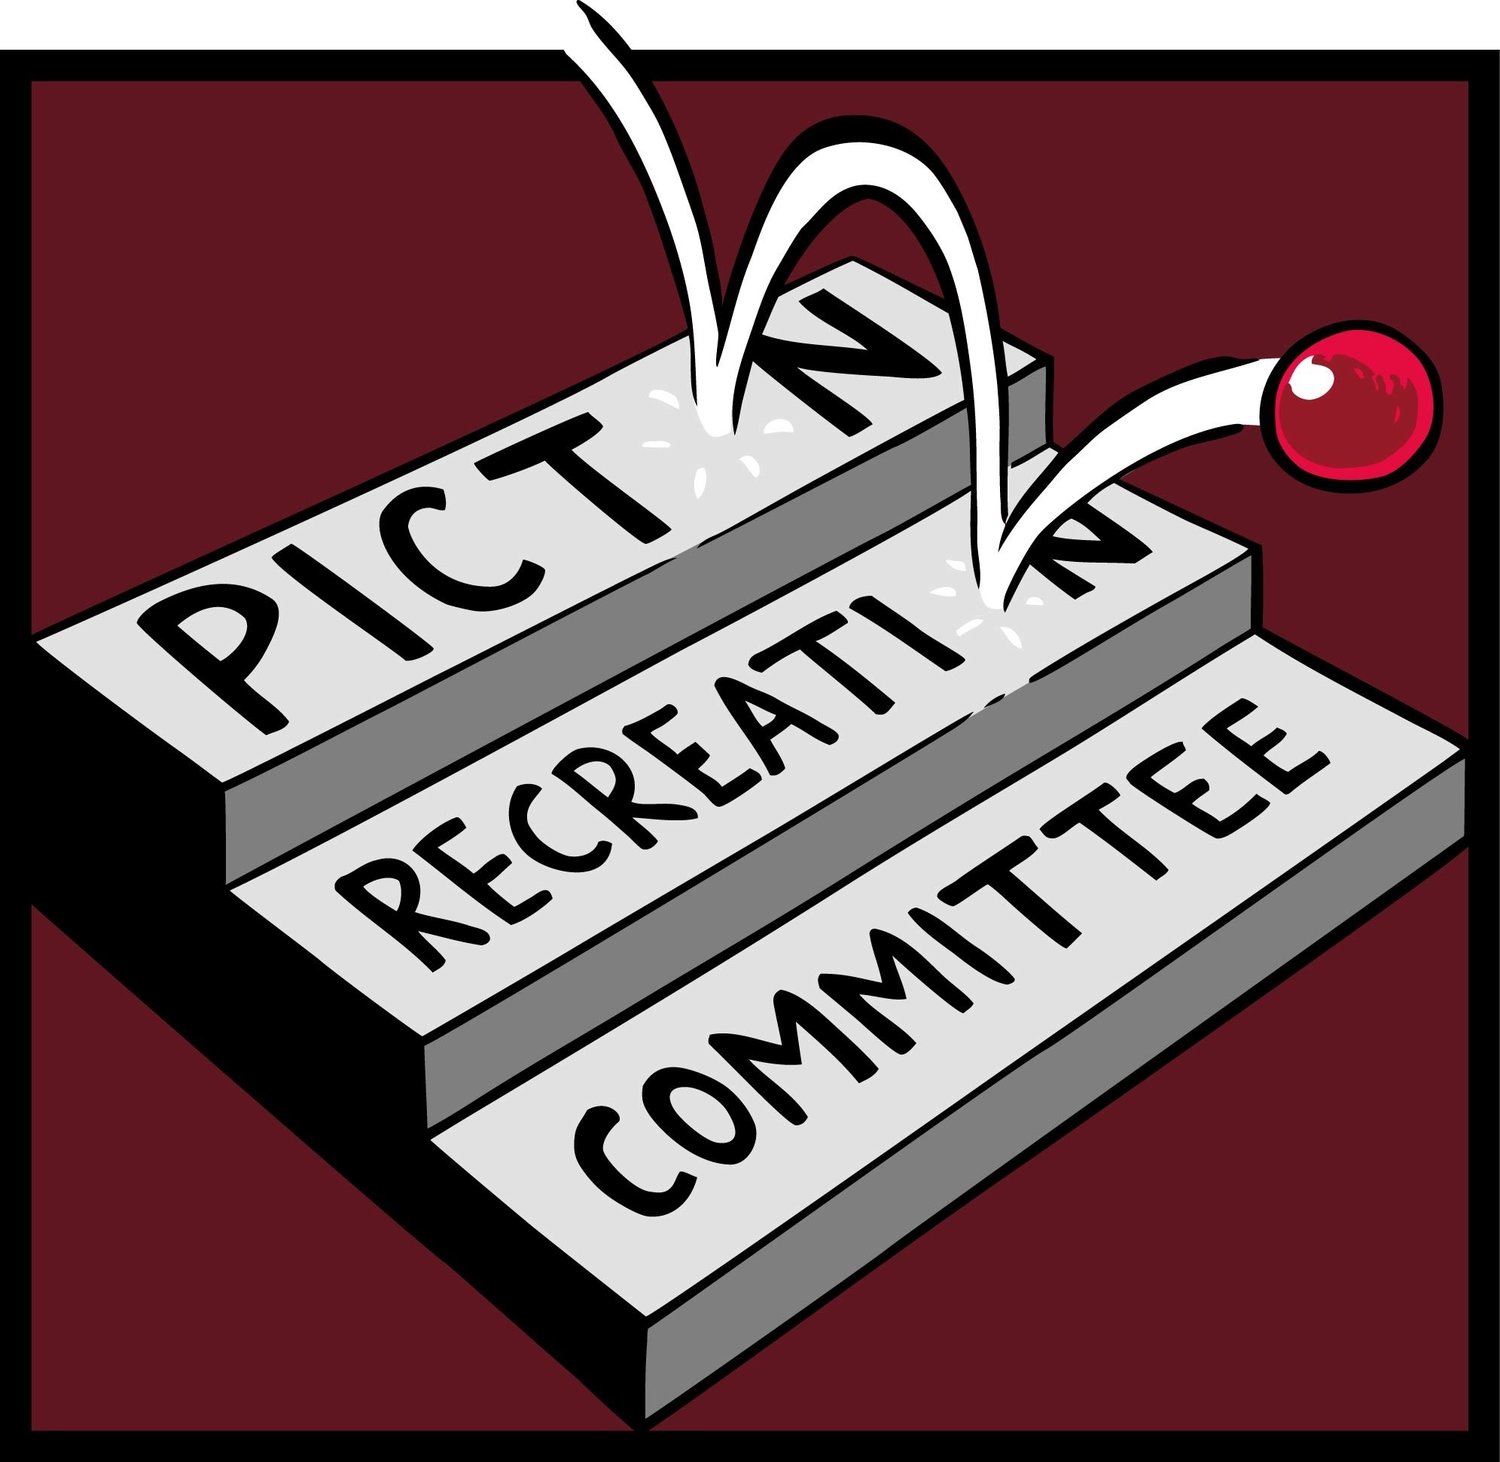 Picton Recreation Committee